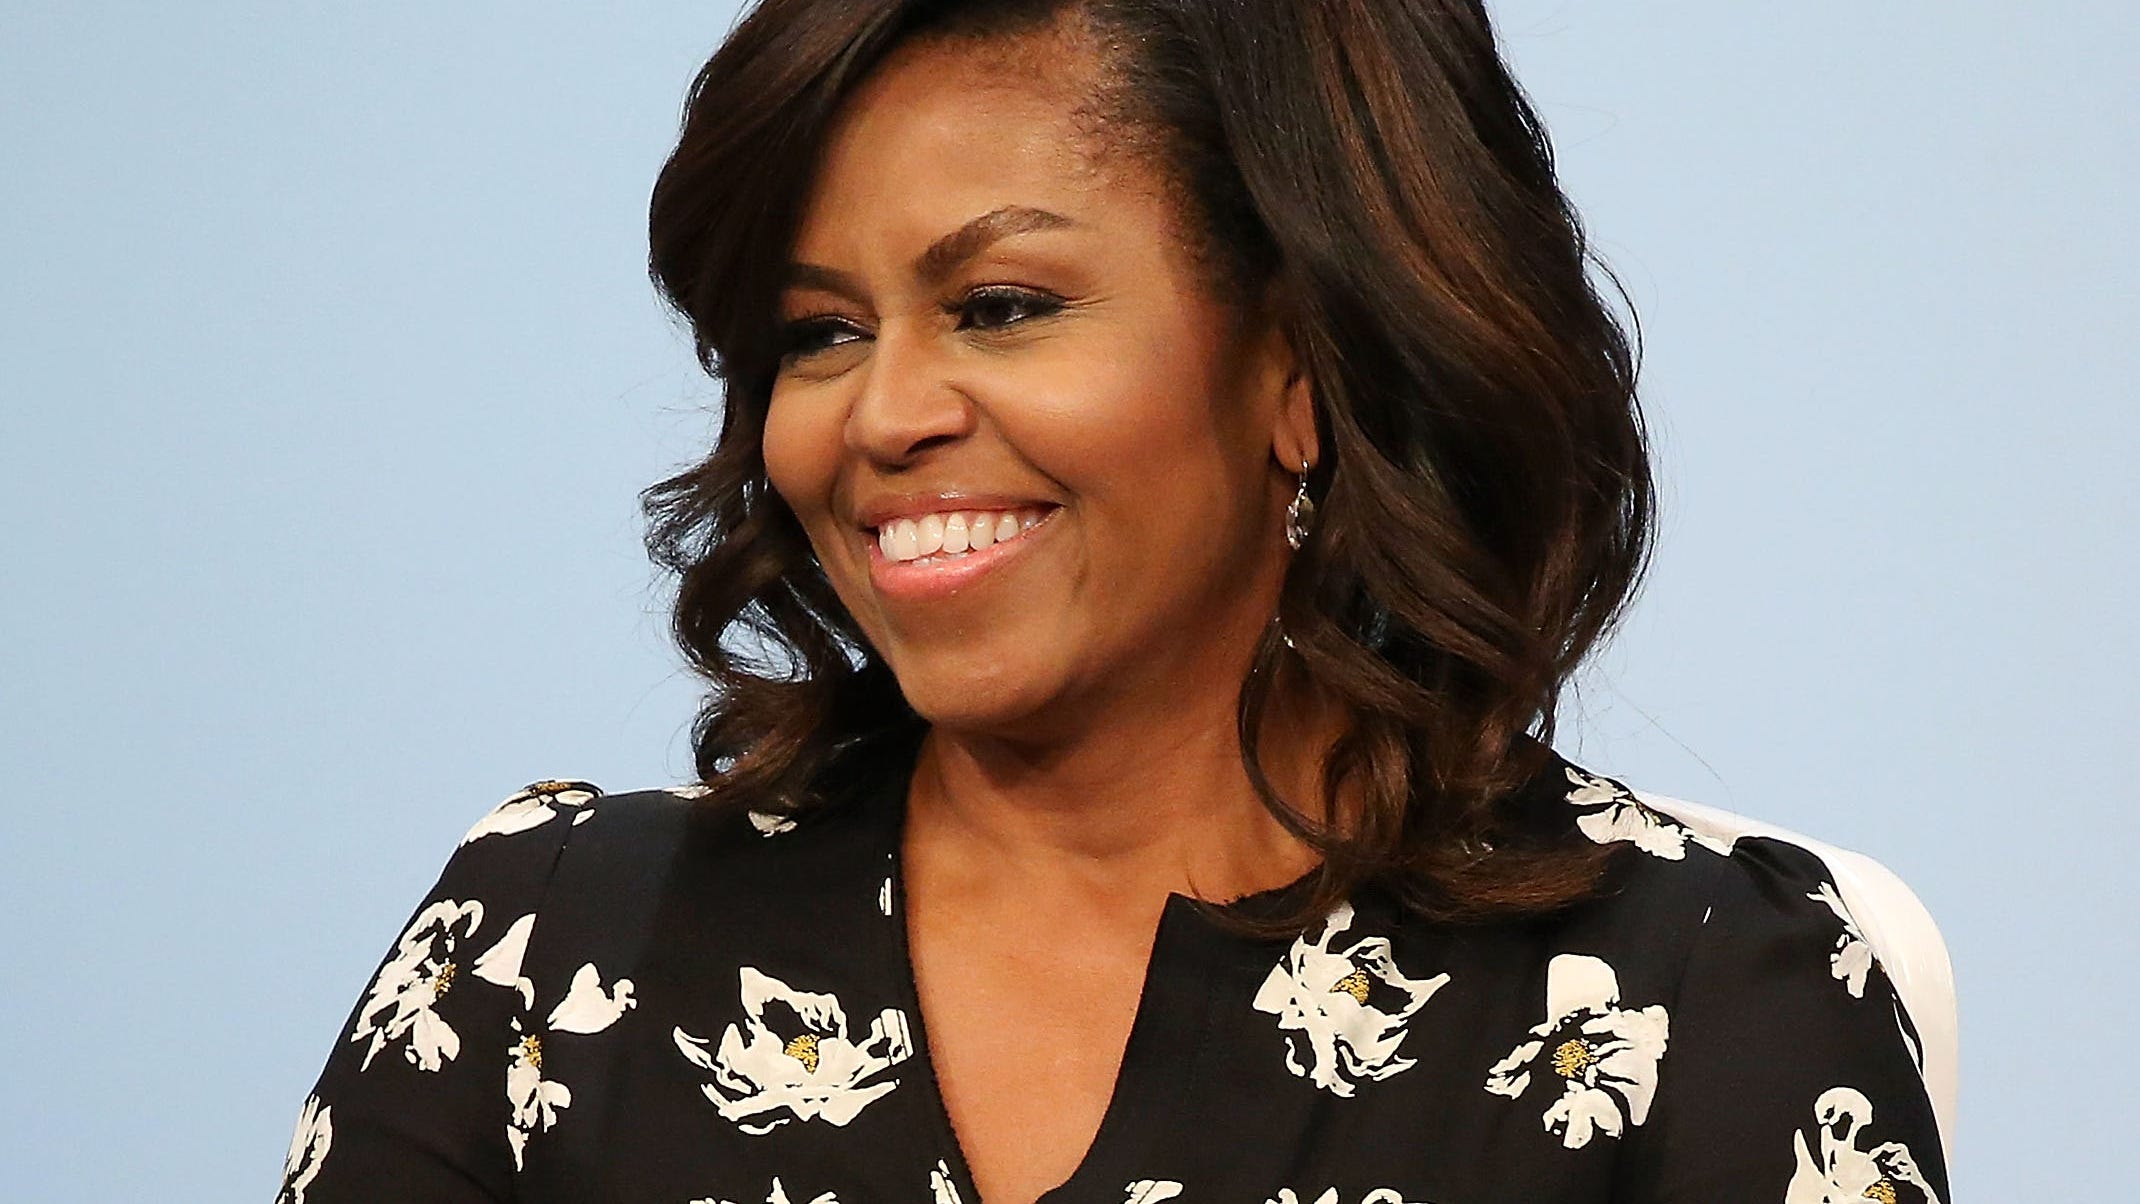 Anti-Donald Trump shirt edited onto photo of Michelle Obama | Fact check